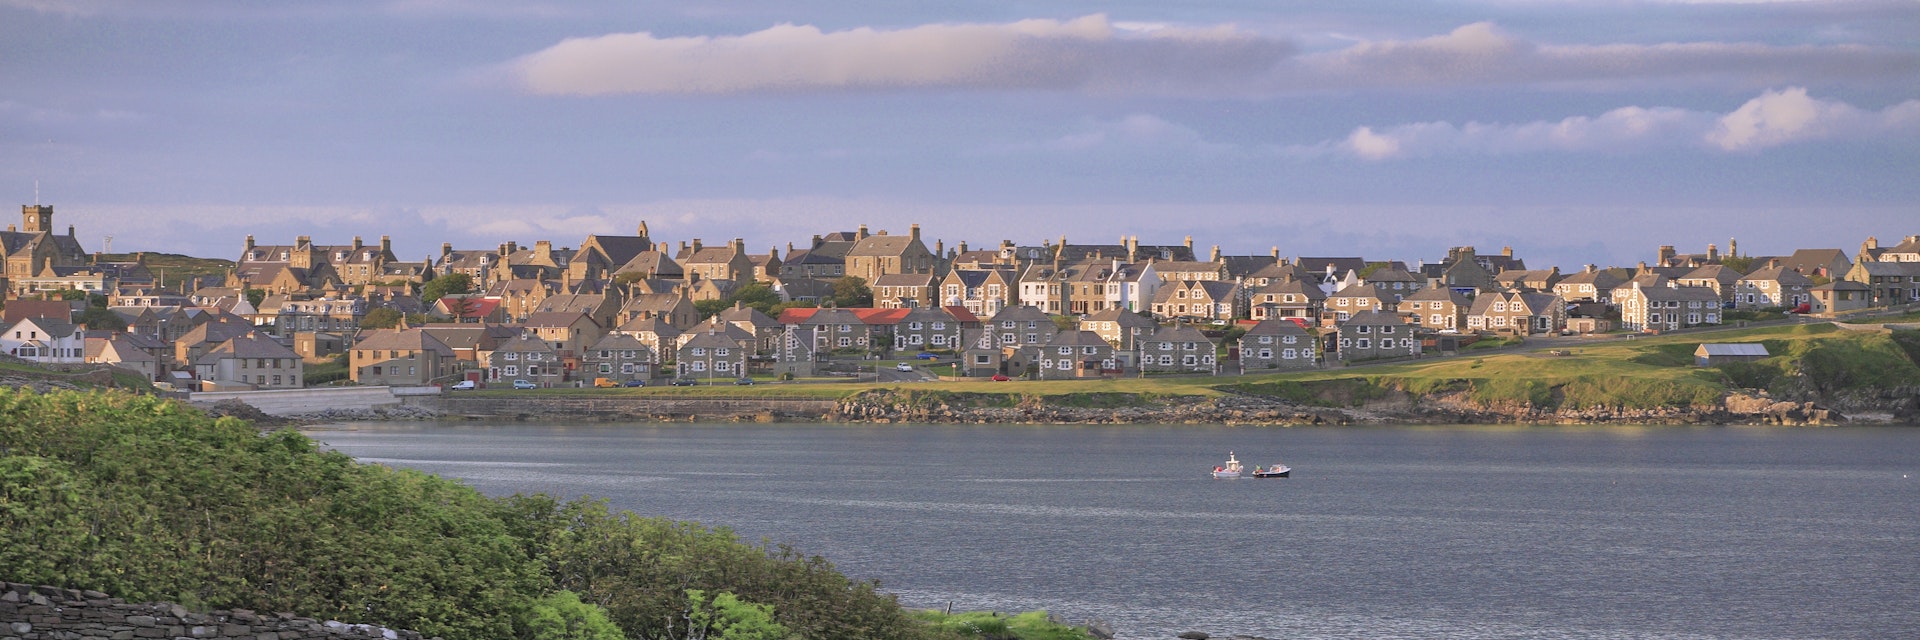 Lerwick city, Shetland islands, Scotland, Europe